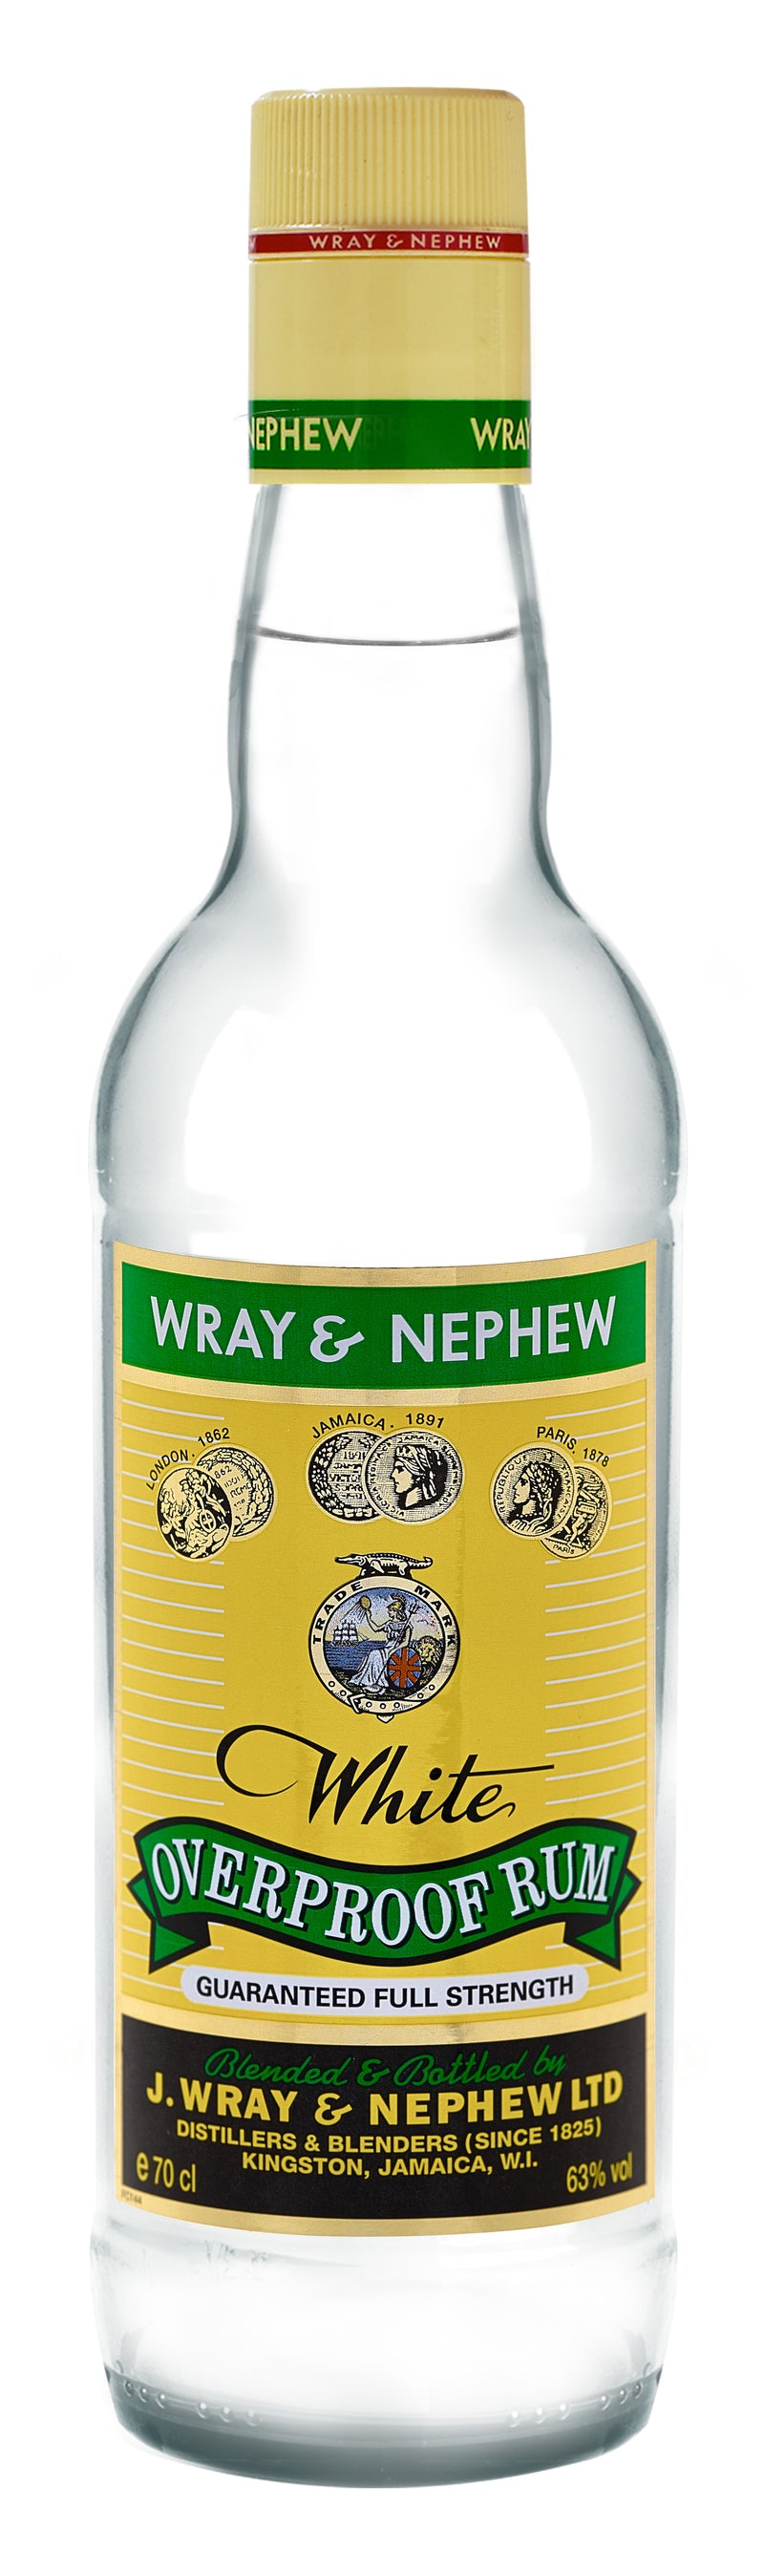 Wray & Nephew White Overproof蘭姆酒 - 700ml